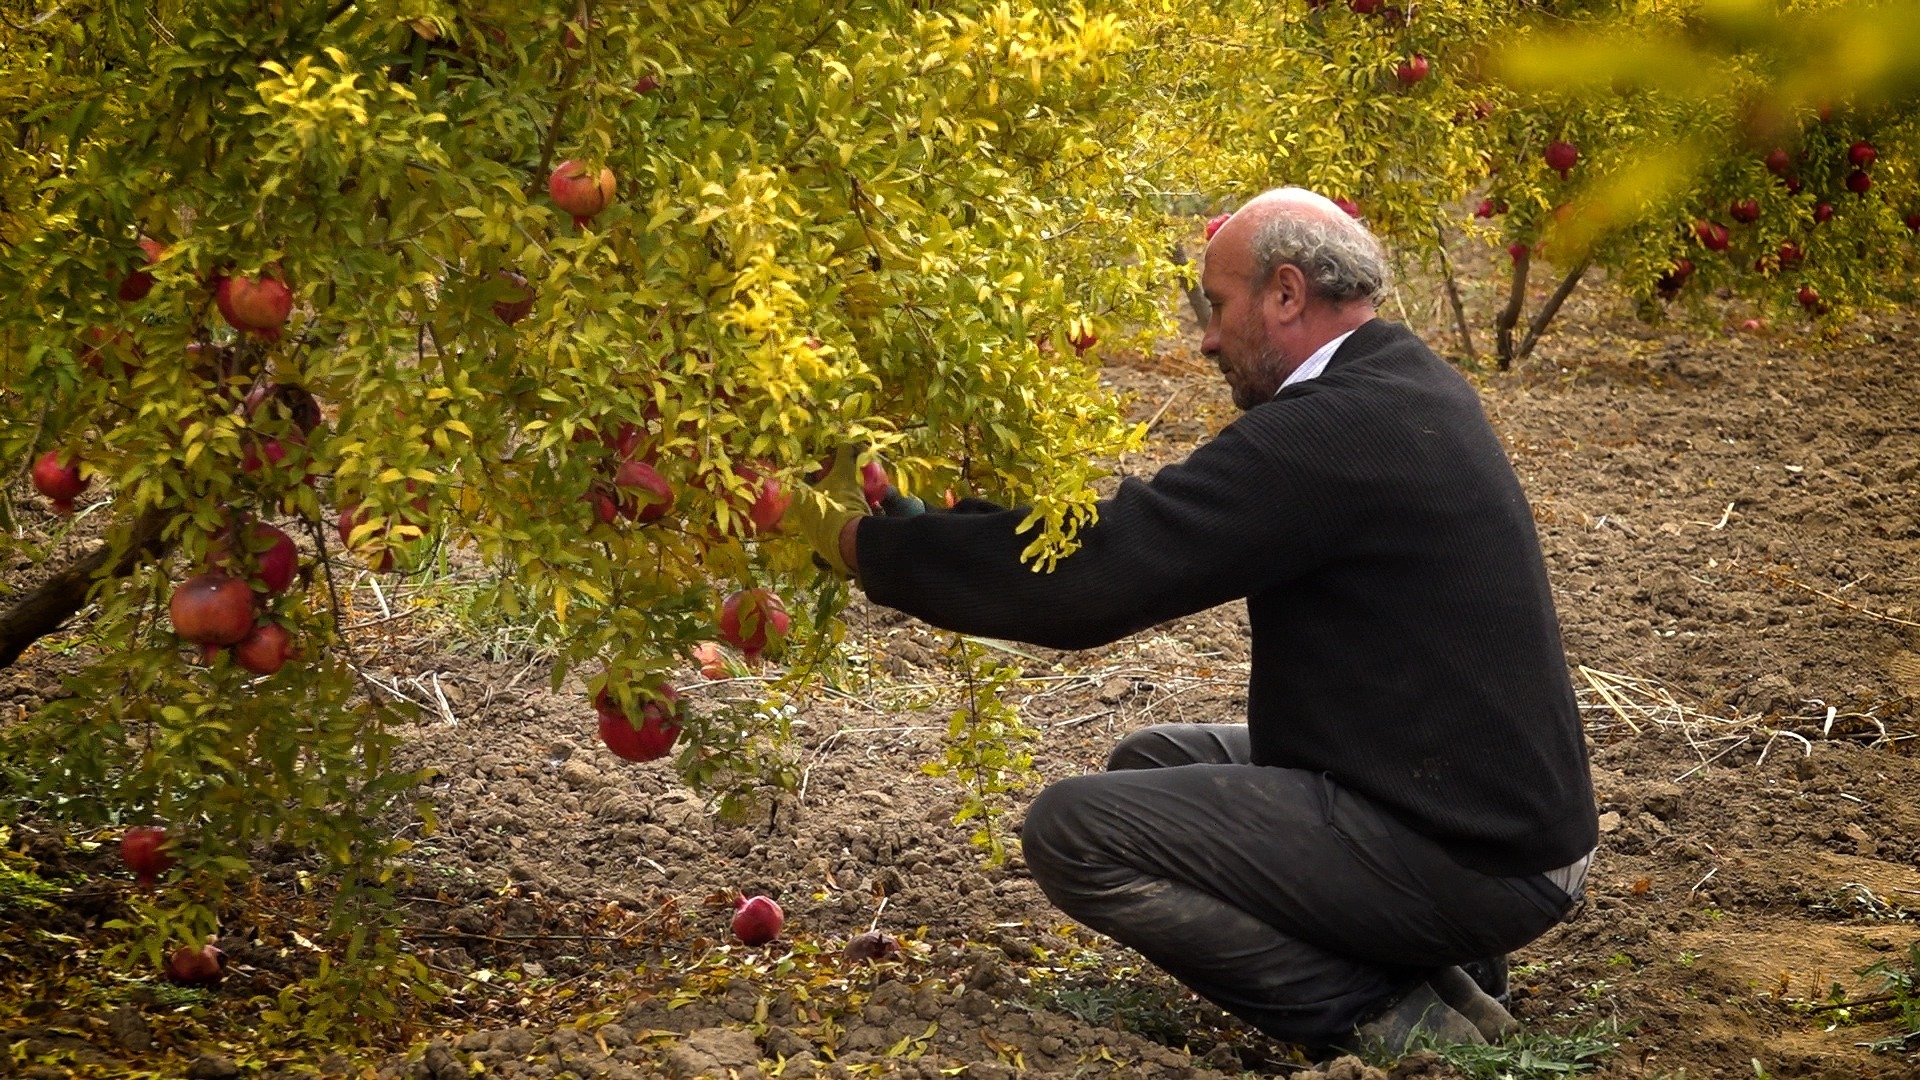 In Karabakh, villagers harvest pomegranates few meters away from Azerbaijanis